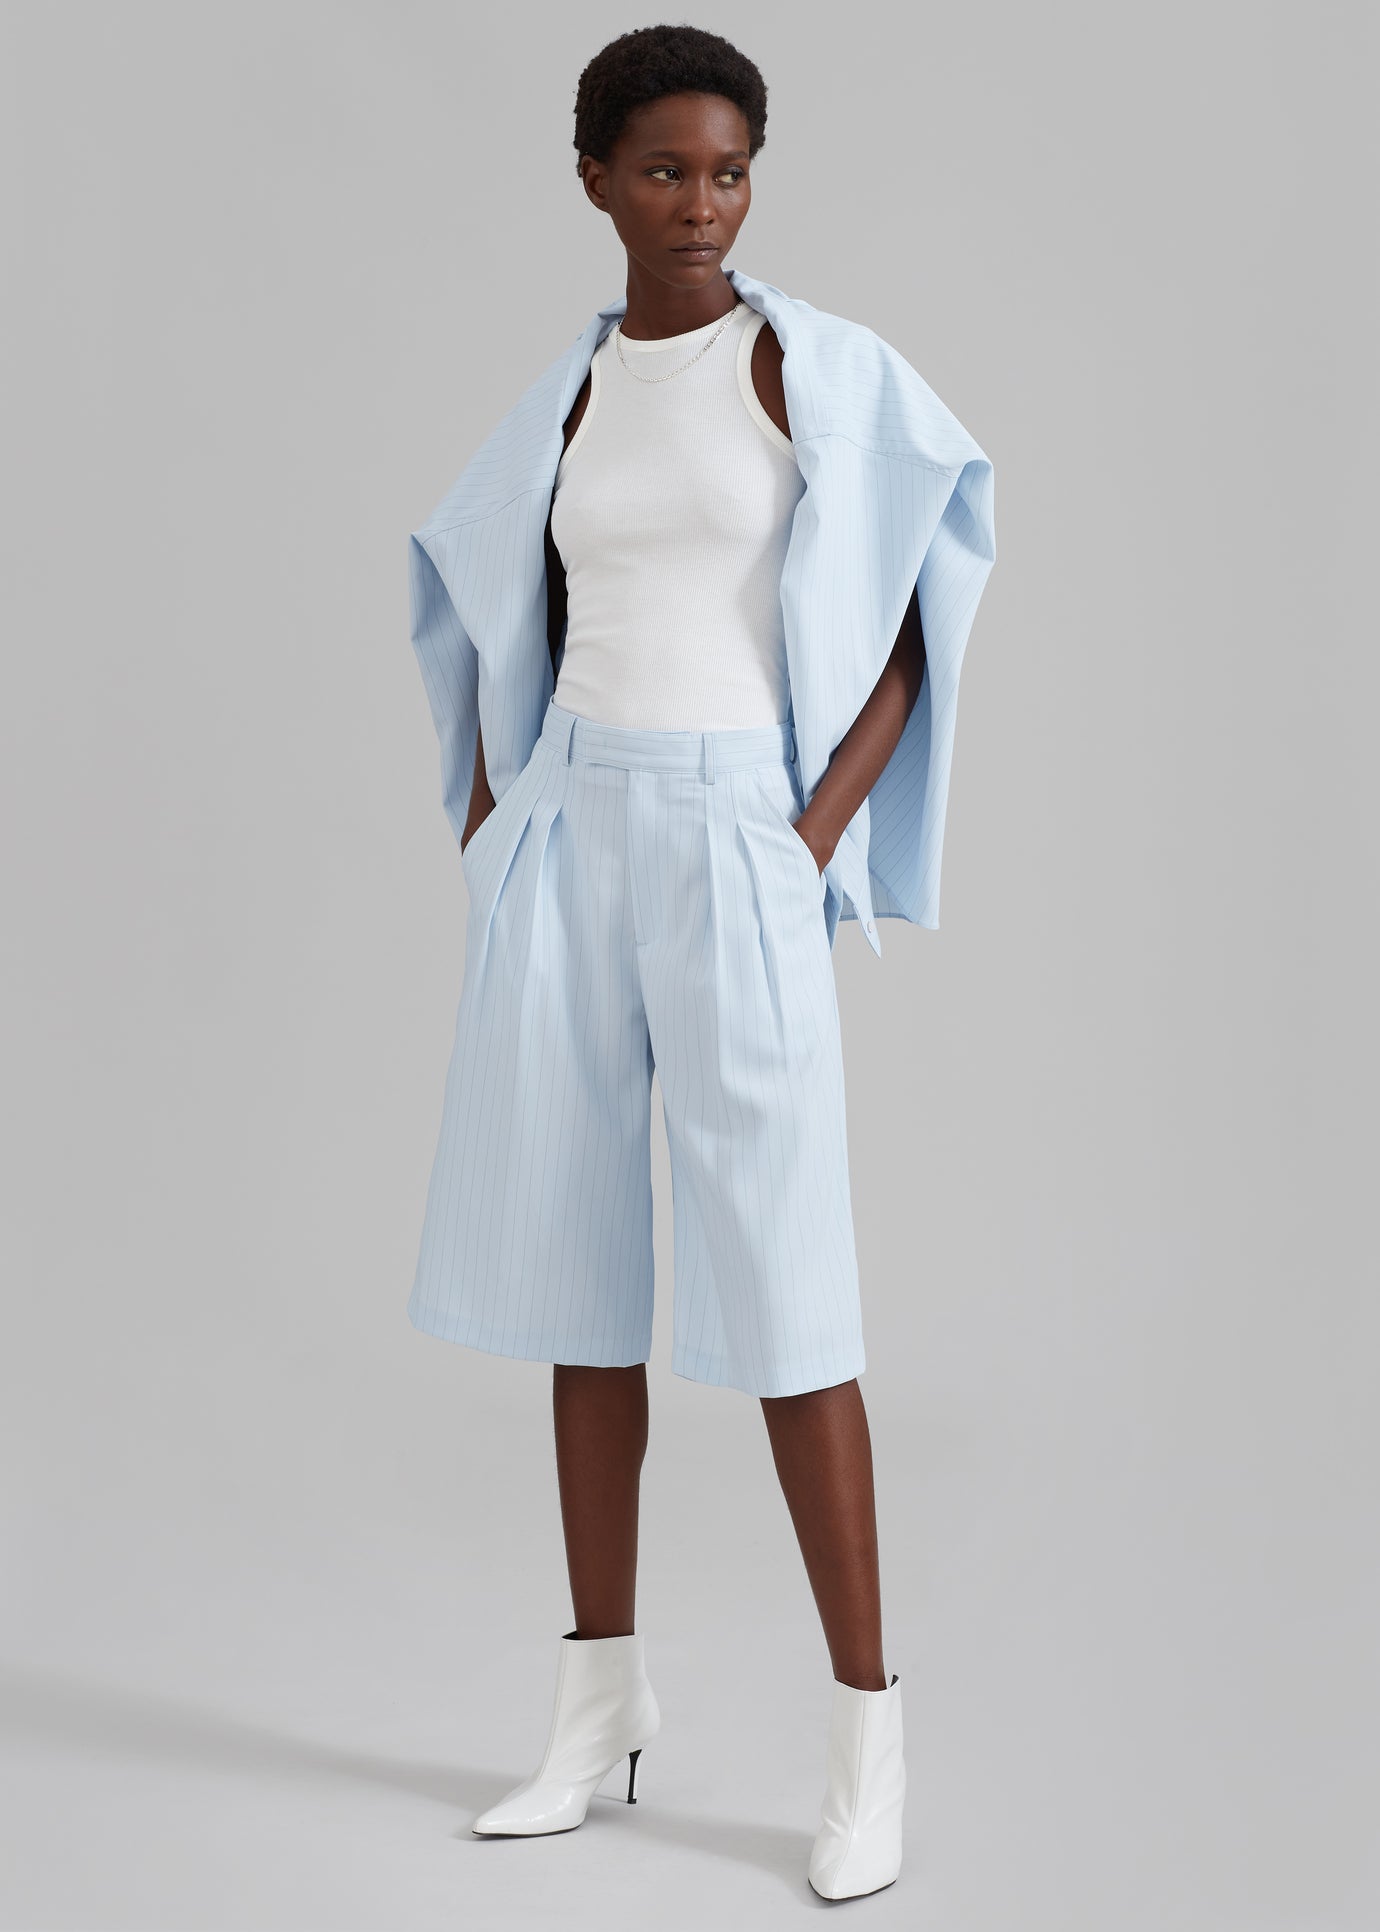 Loulou Studio Bira Polo Shirt Dress - Beige – The Frankie Shop